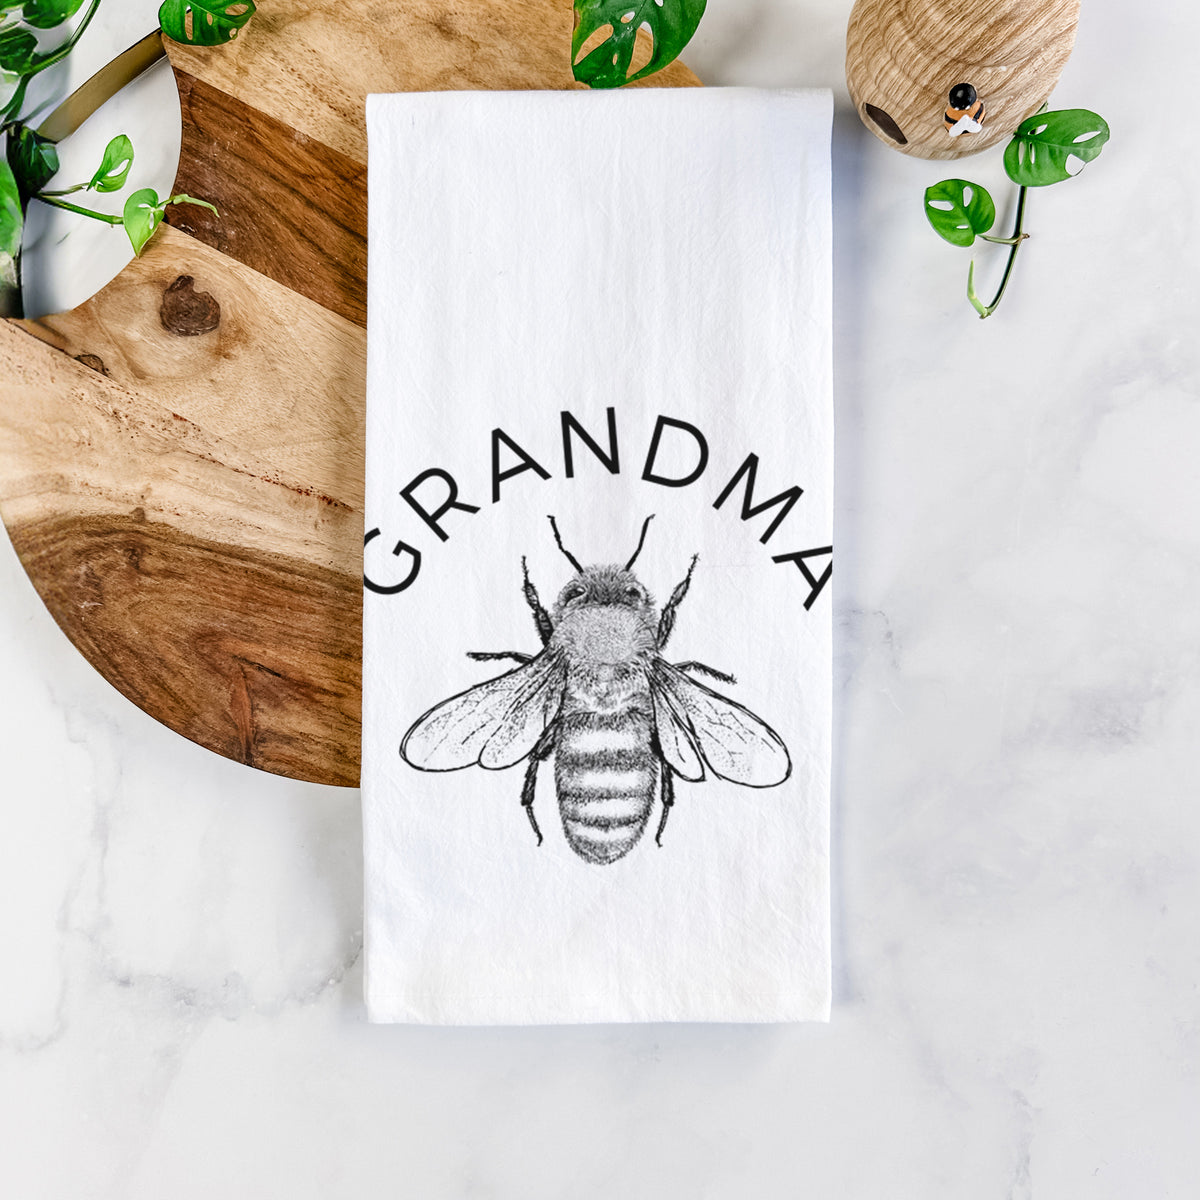 Grandma Bee Tea Towel